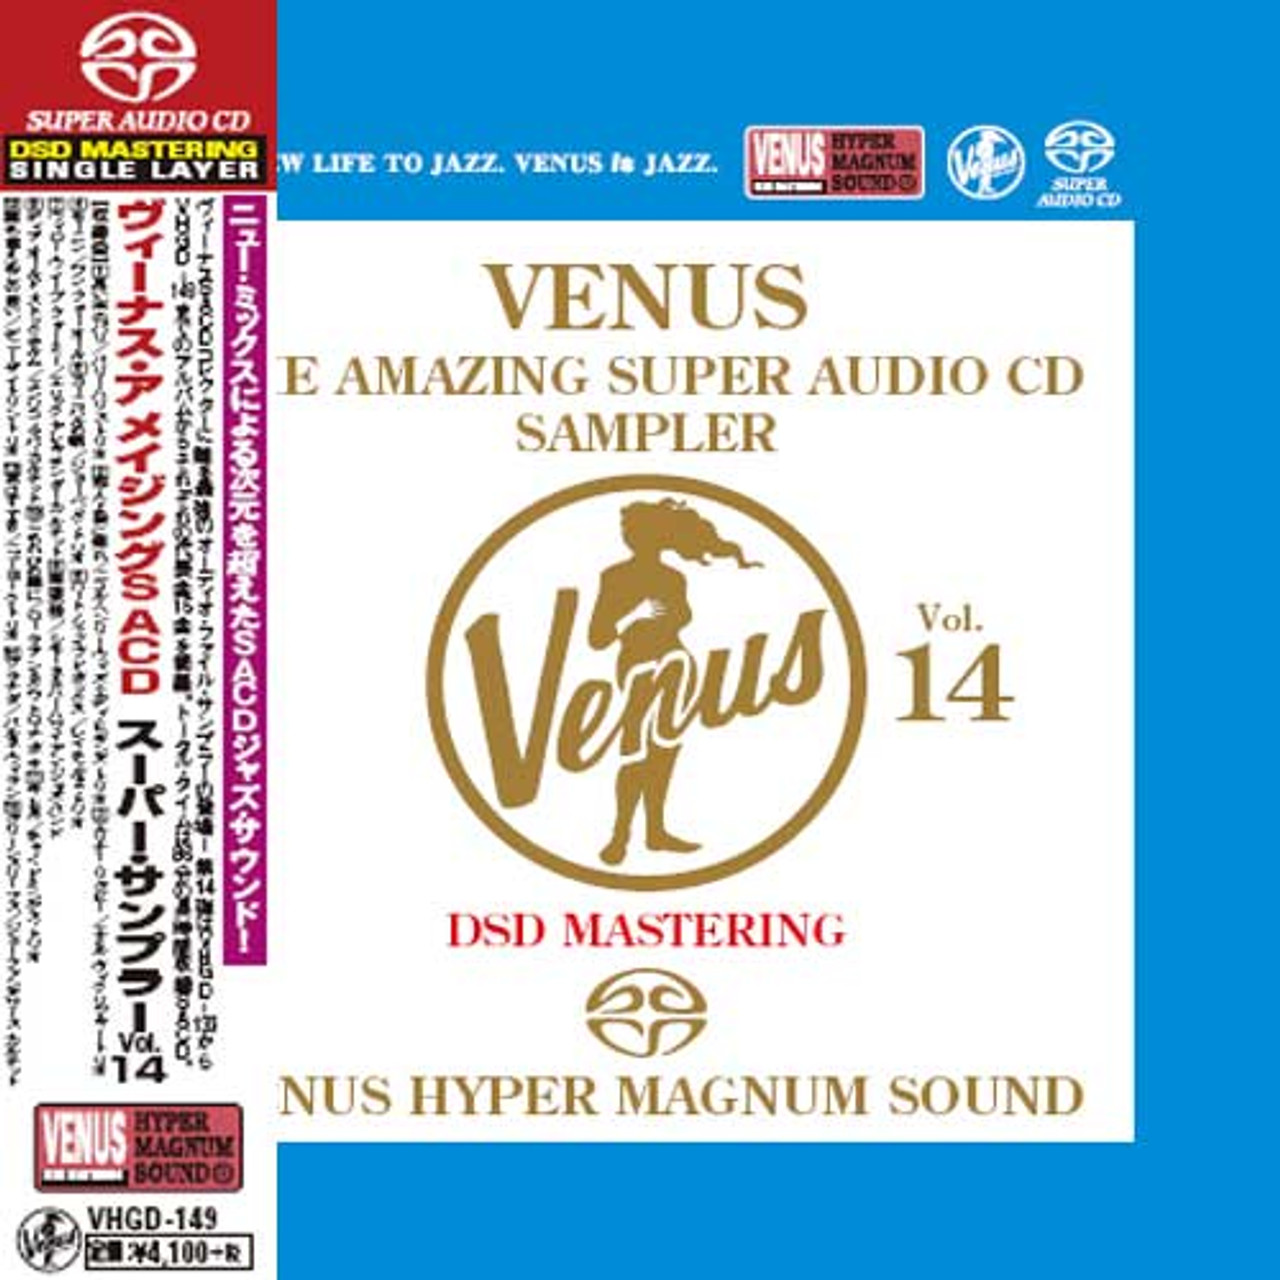 Import　Sampler　Venus　Japanese　CD　The　14　Stereo　Amazing　SACD　Super　Audio　Vol.　Single-Layer